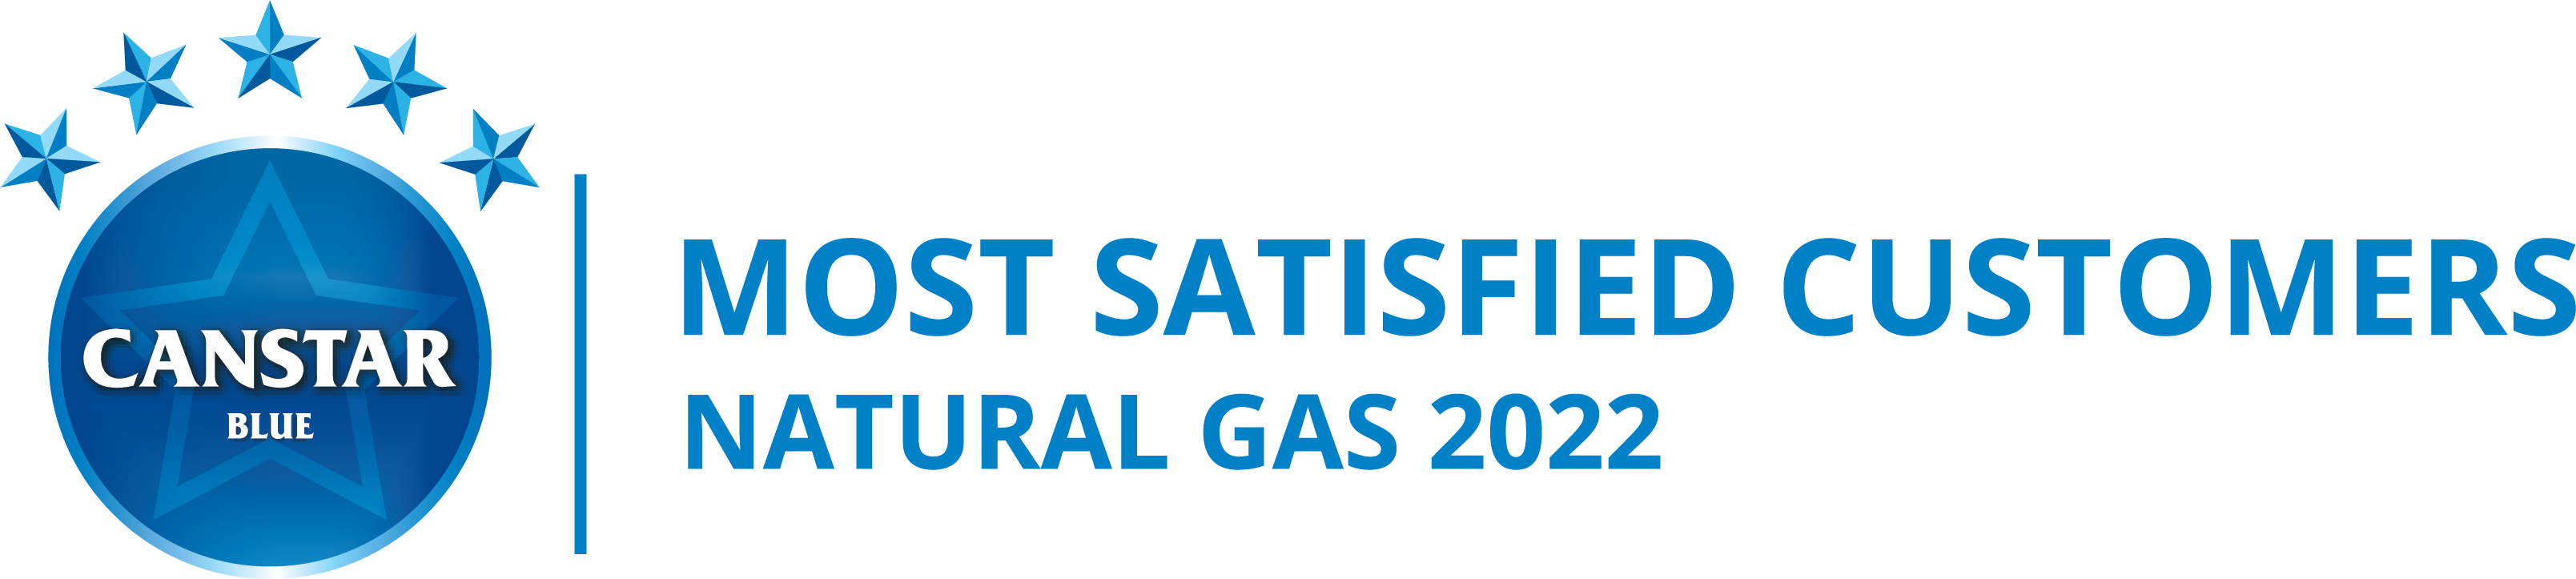 MSC natural gas award logo 2022